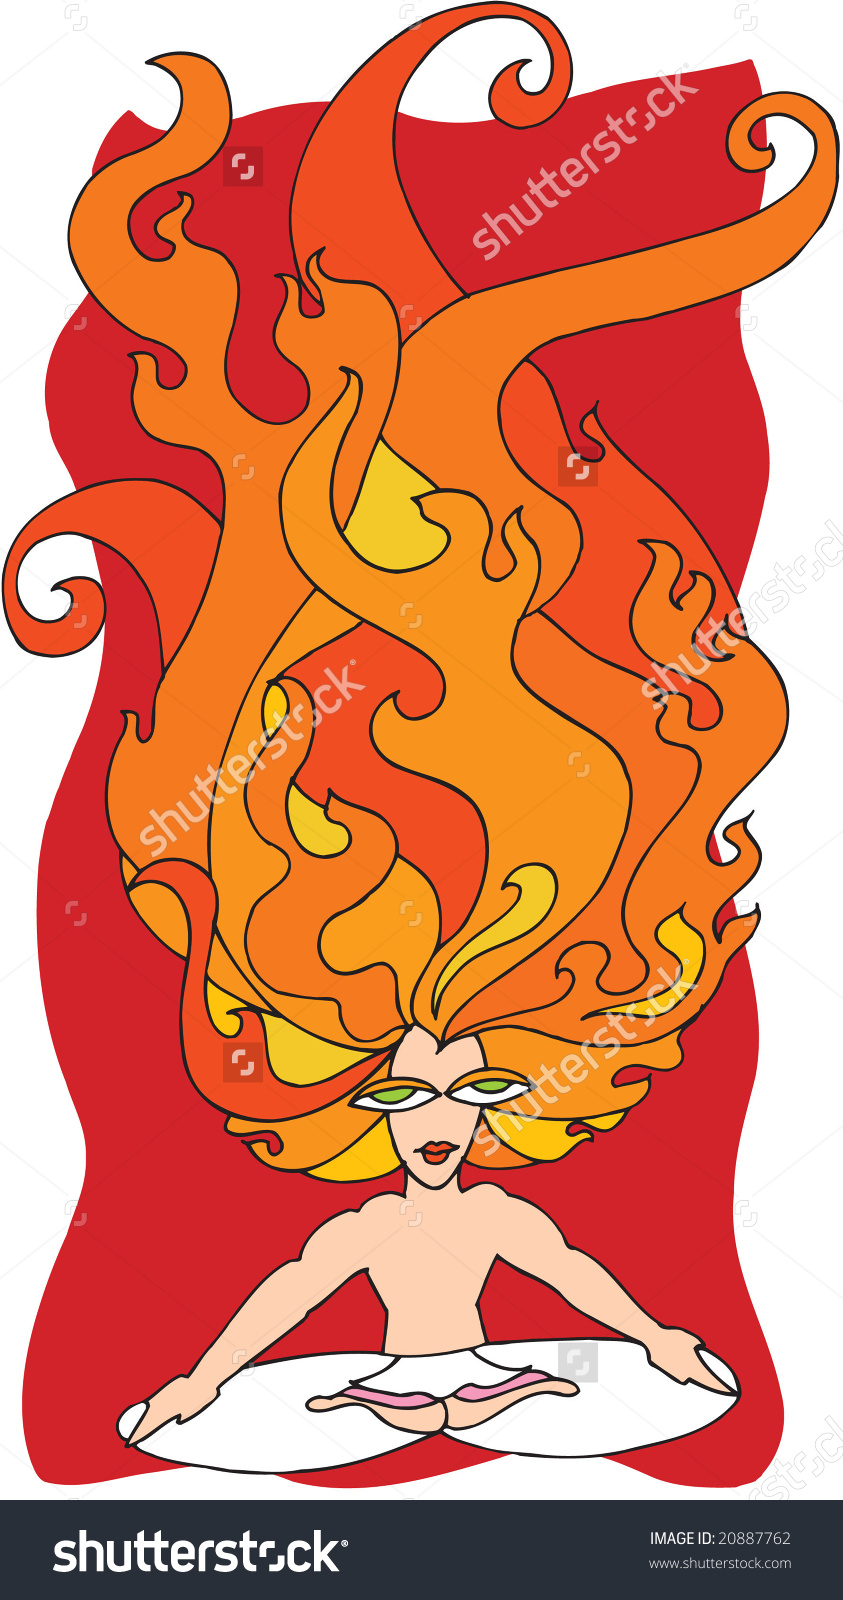 Agni God Fire Hindu Pantheon Stock Illustration 20887762.